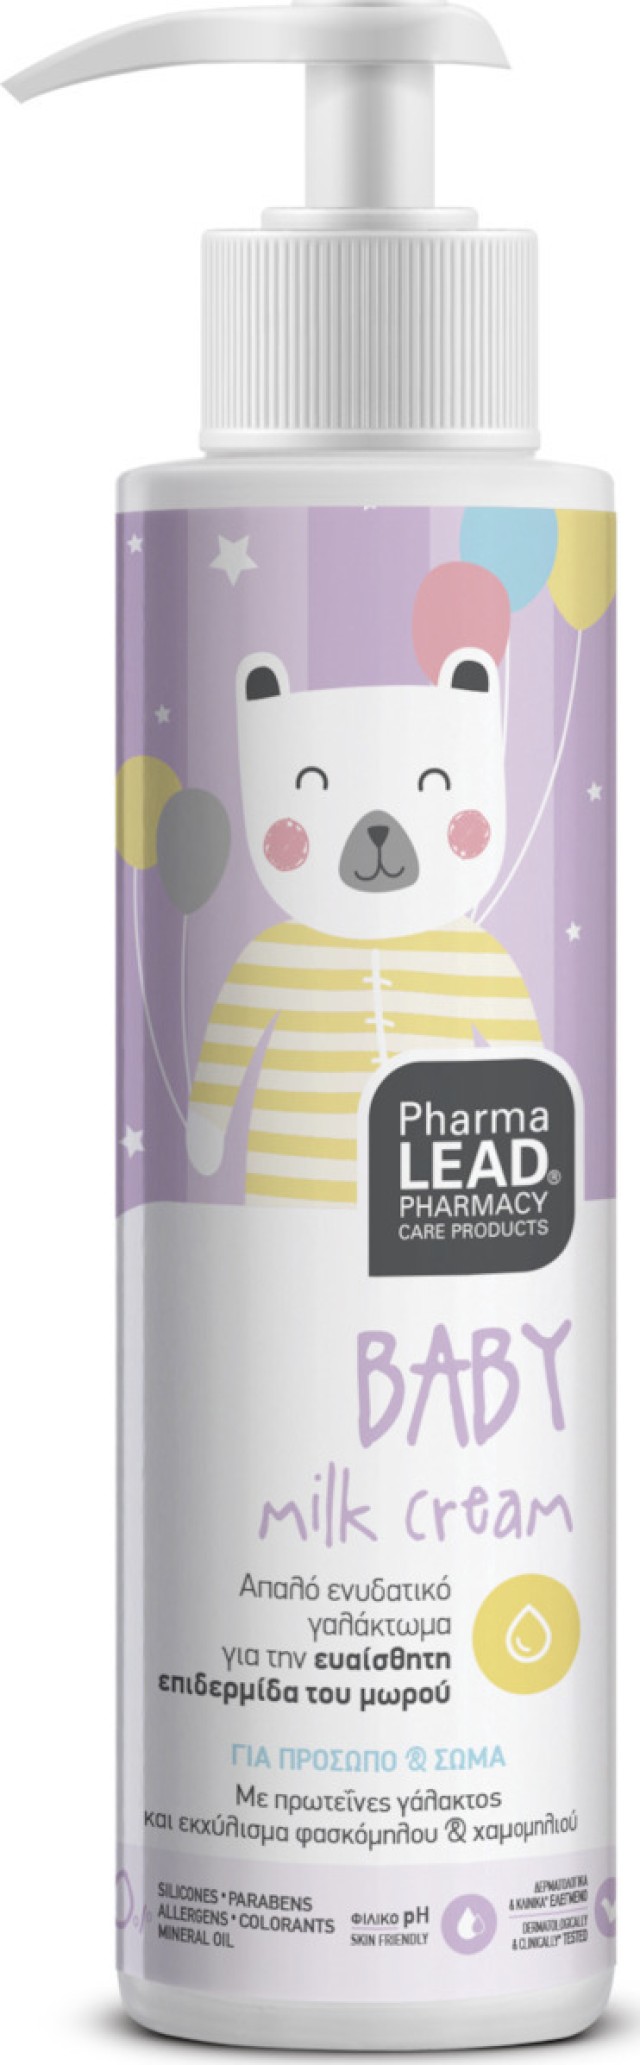 PharmaLead Baby Milk Cream Παιδικό Ενυδατικό Γαλάκτωμα Για Πρόσωπο - Σώμα, 150ml